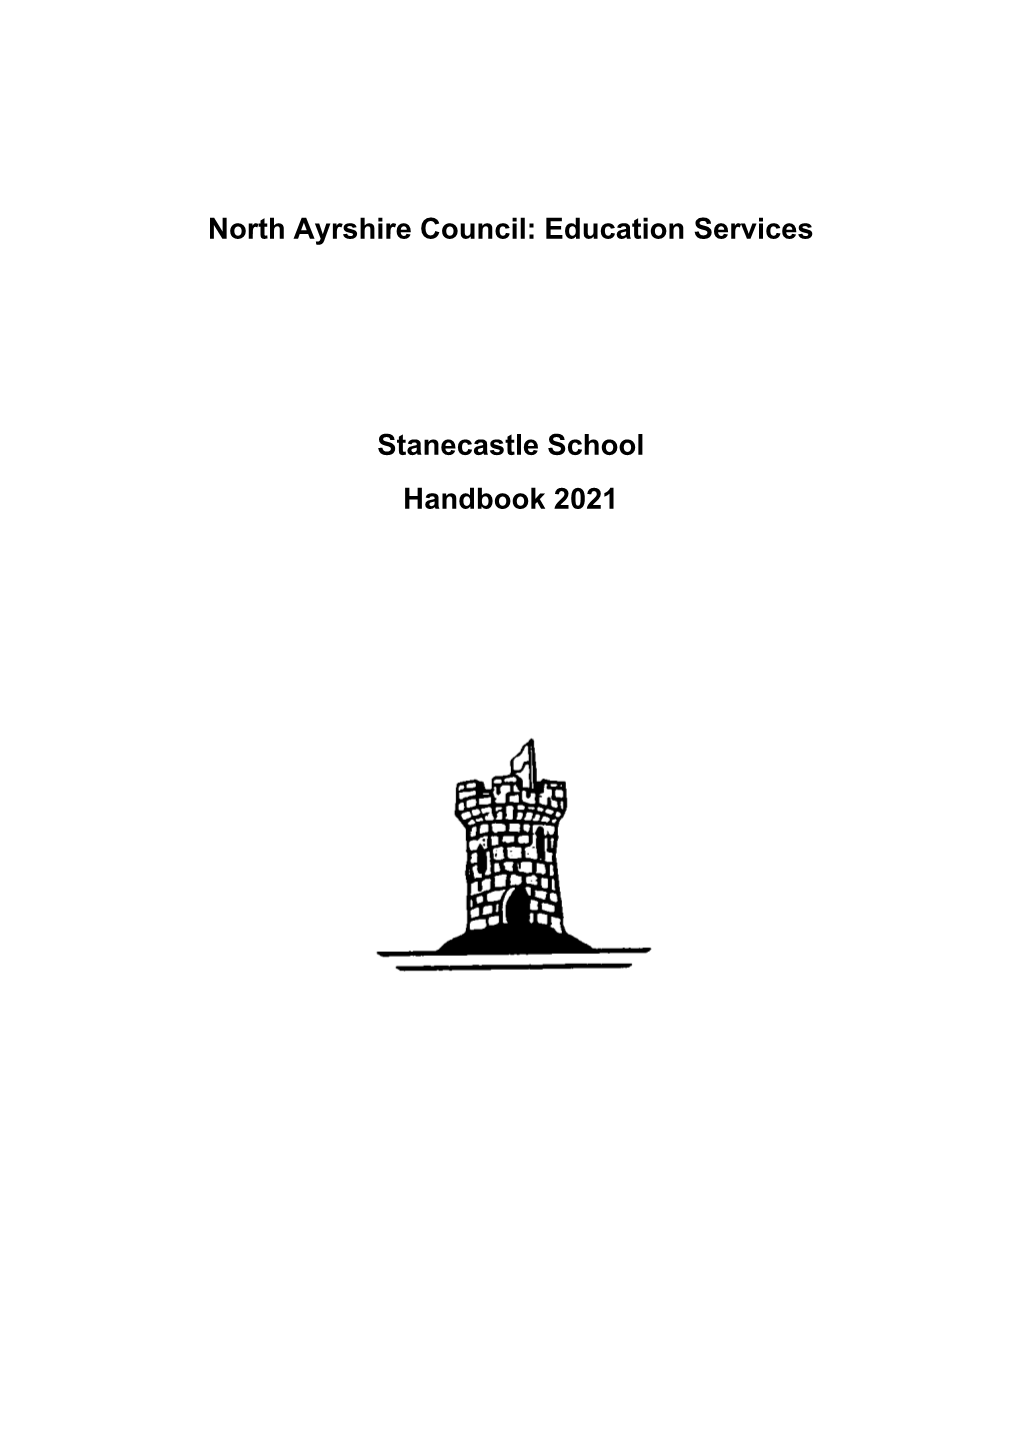 Stanecastle School (PDF, 121Kb)